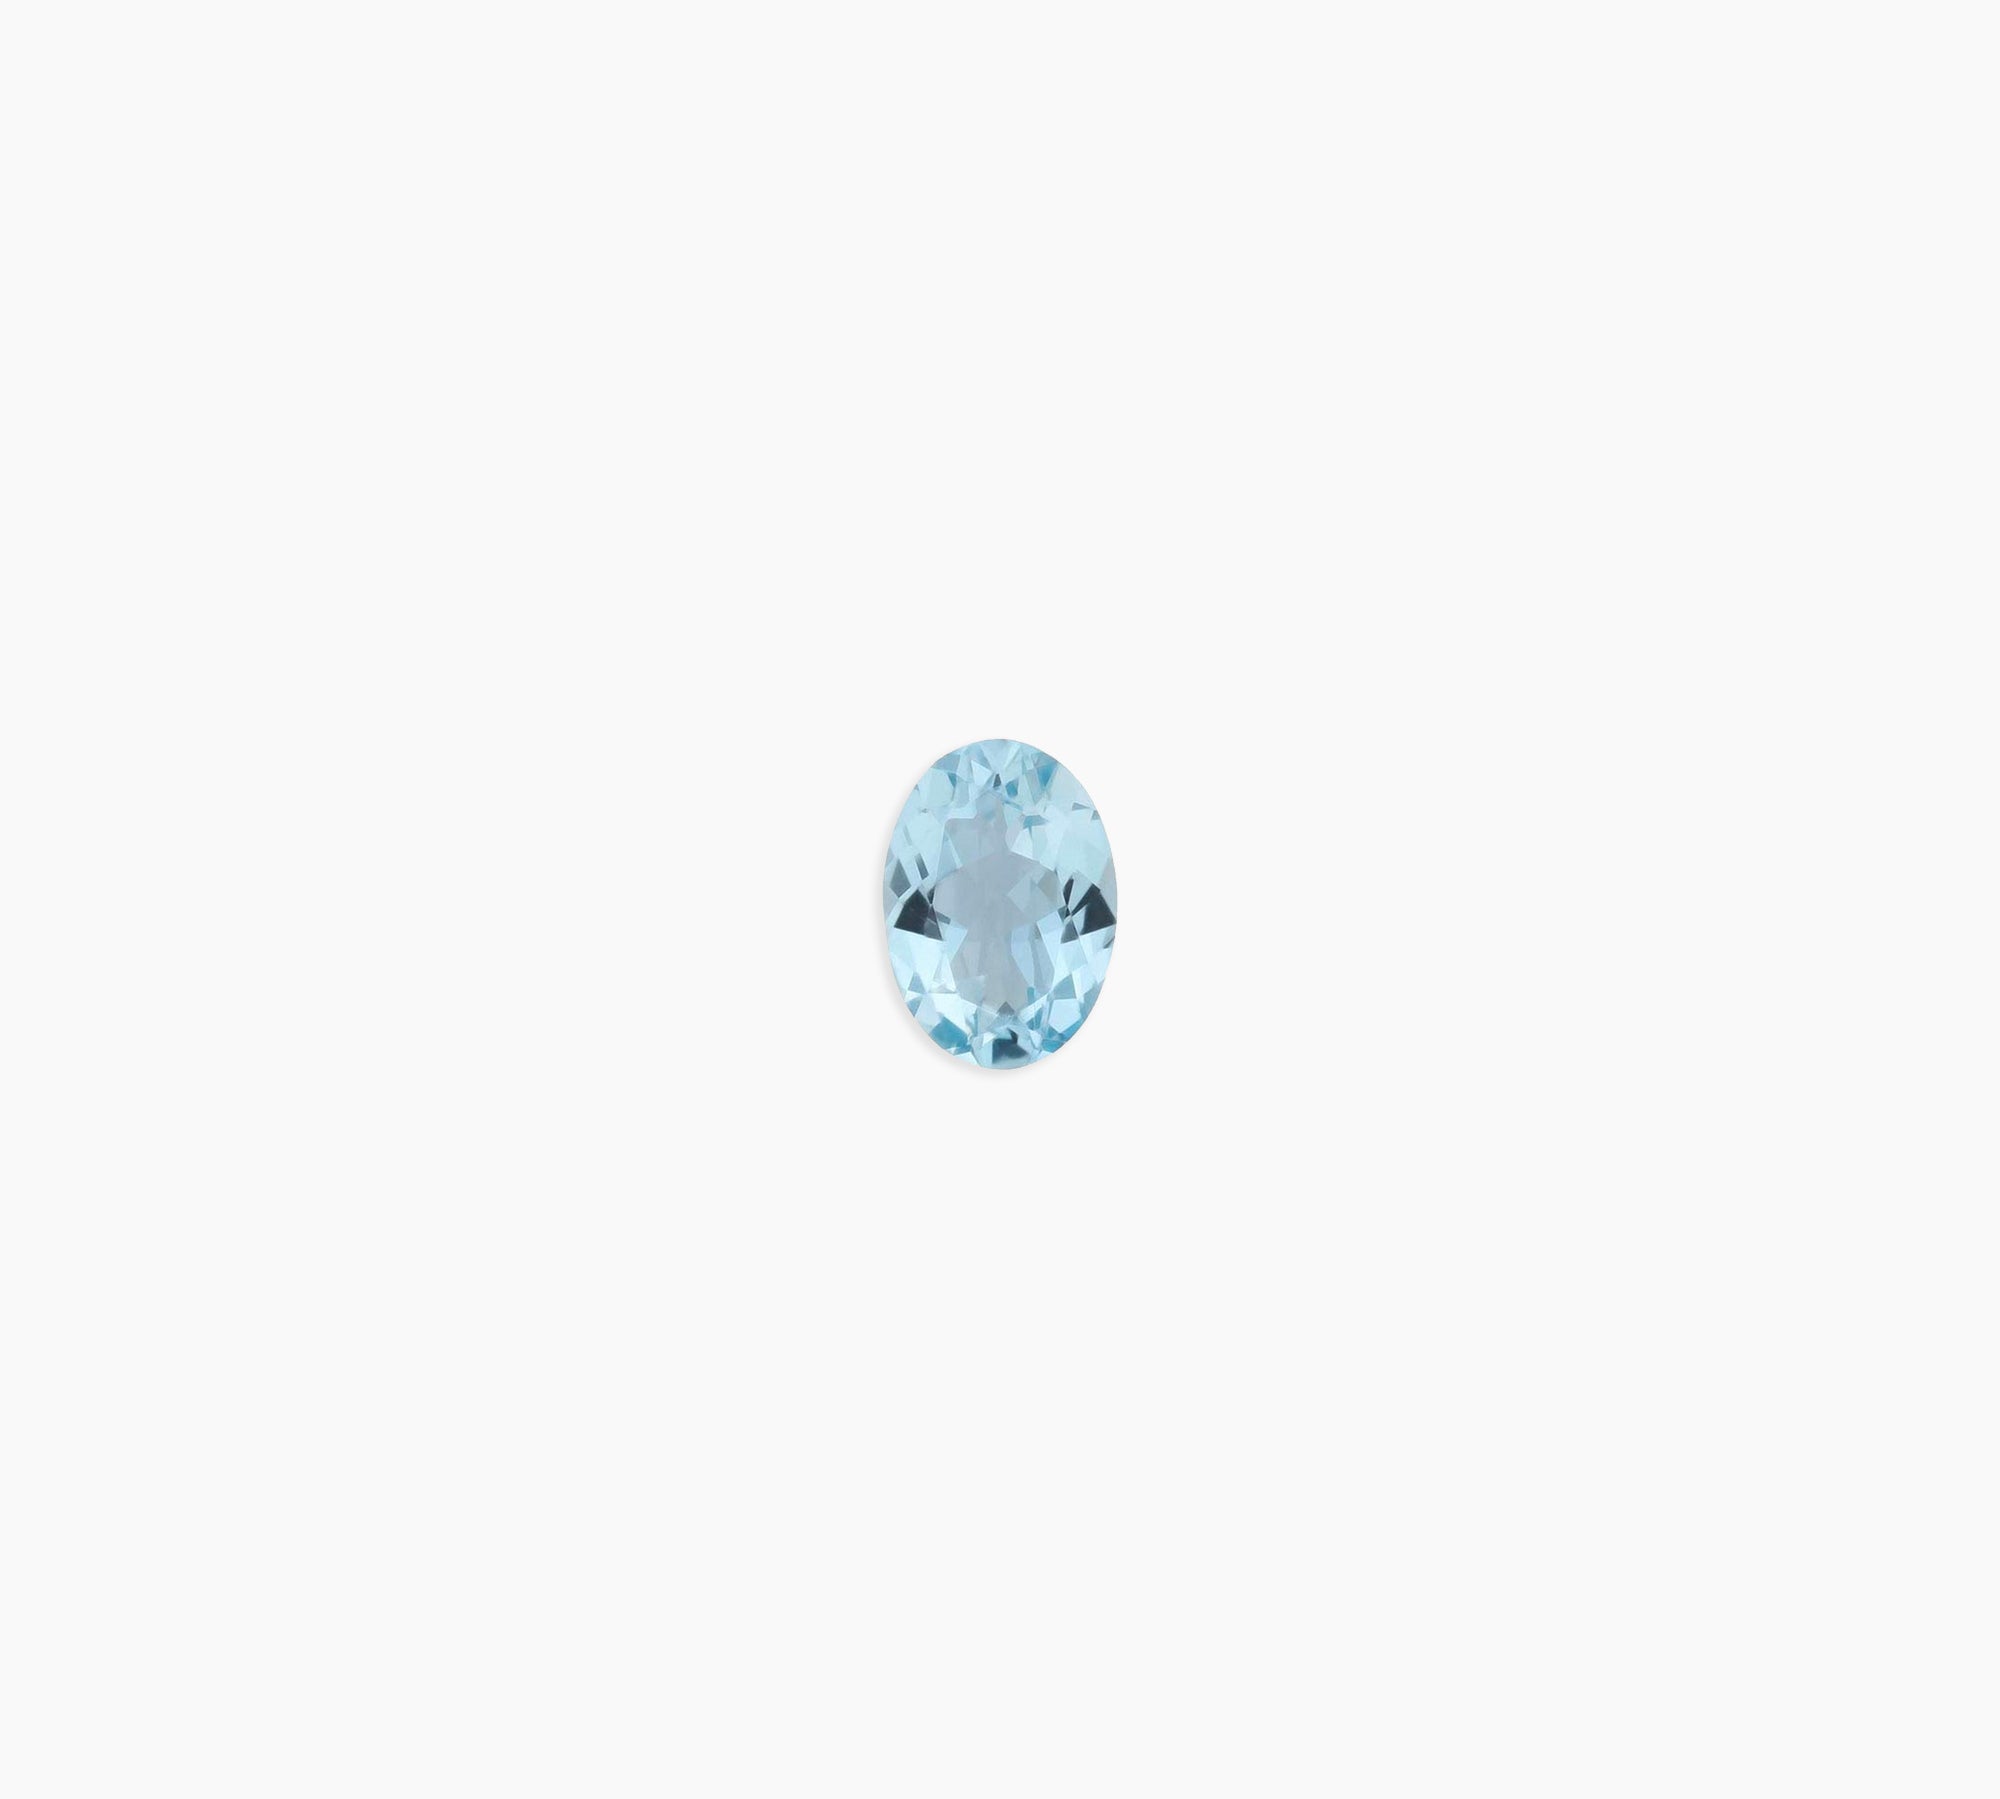 Aquamarine Gemstone Charm - High Quality, Affordable, Individual Birthstone Charms for a Custom Locket - March Birthday Gift - Brevity Jewelry